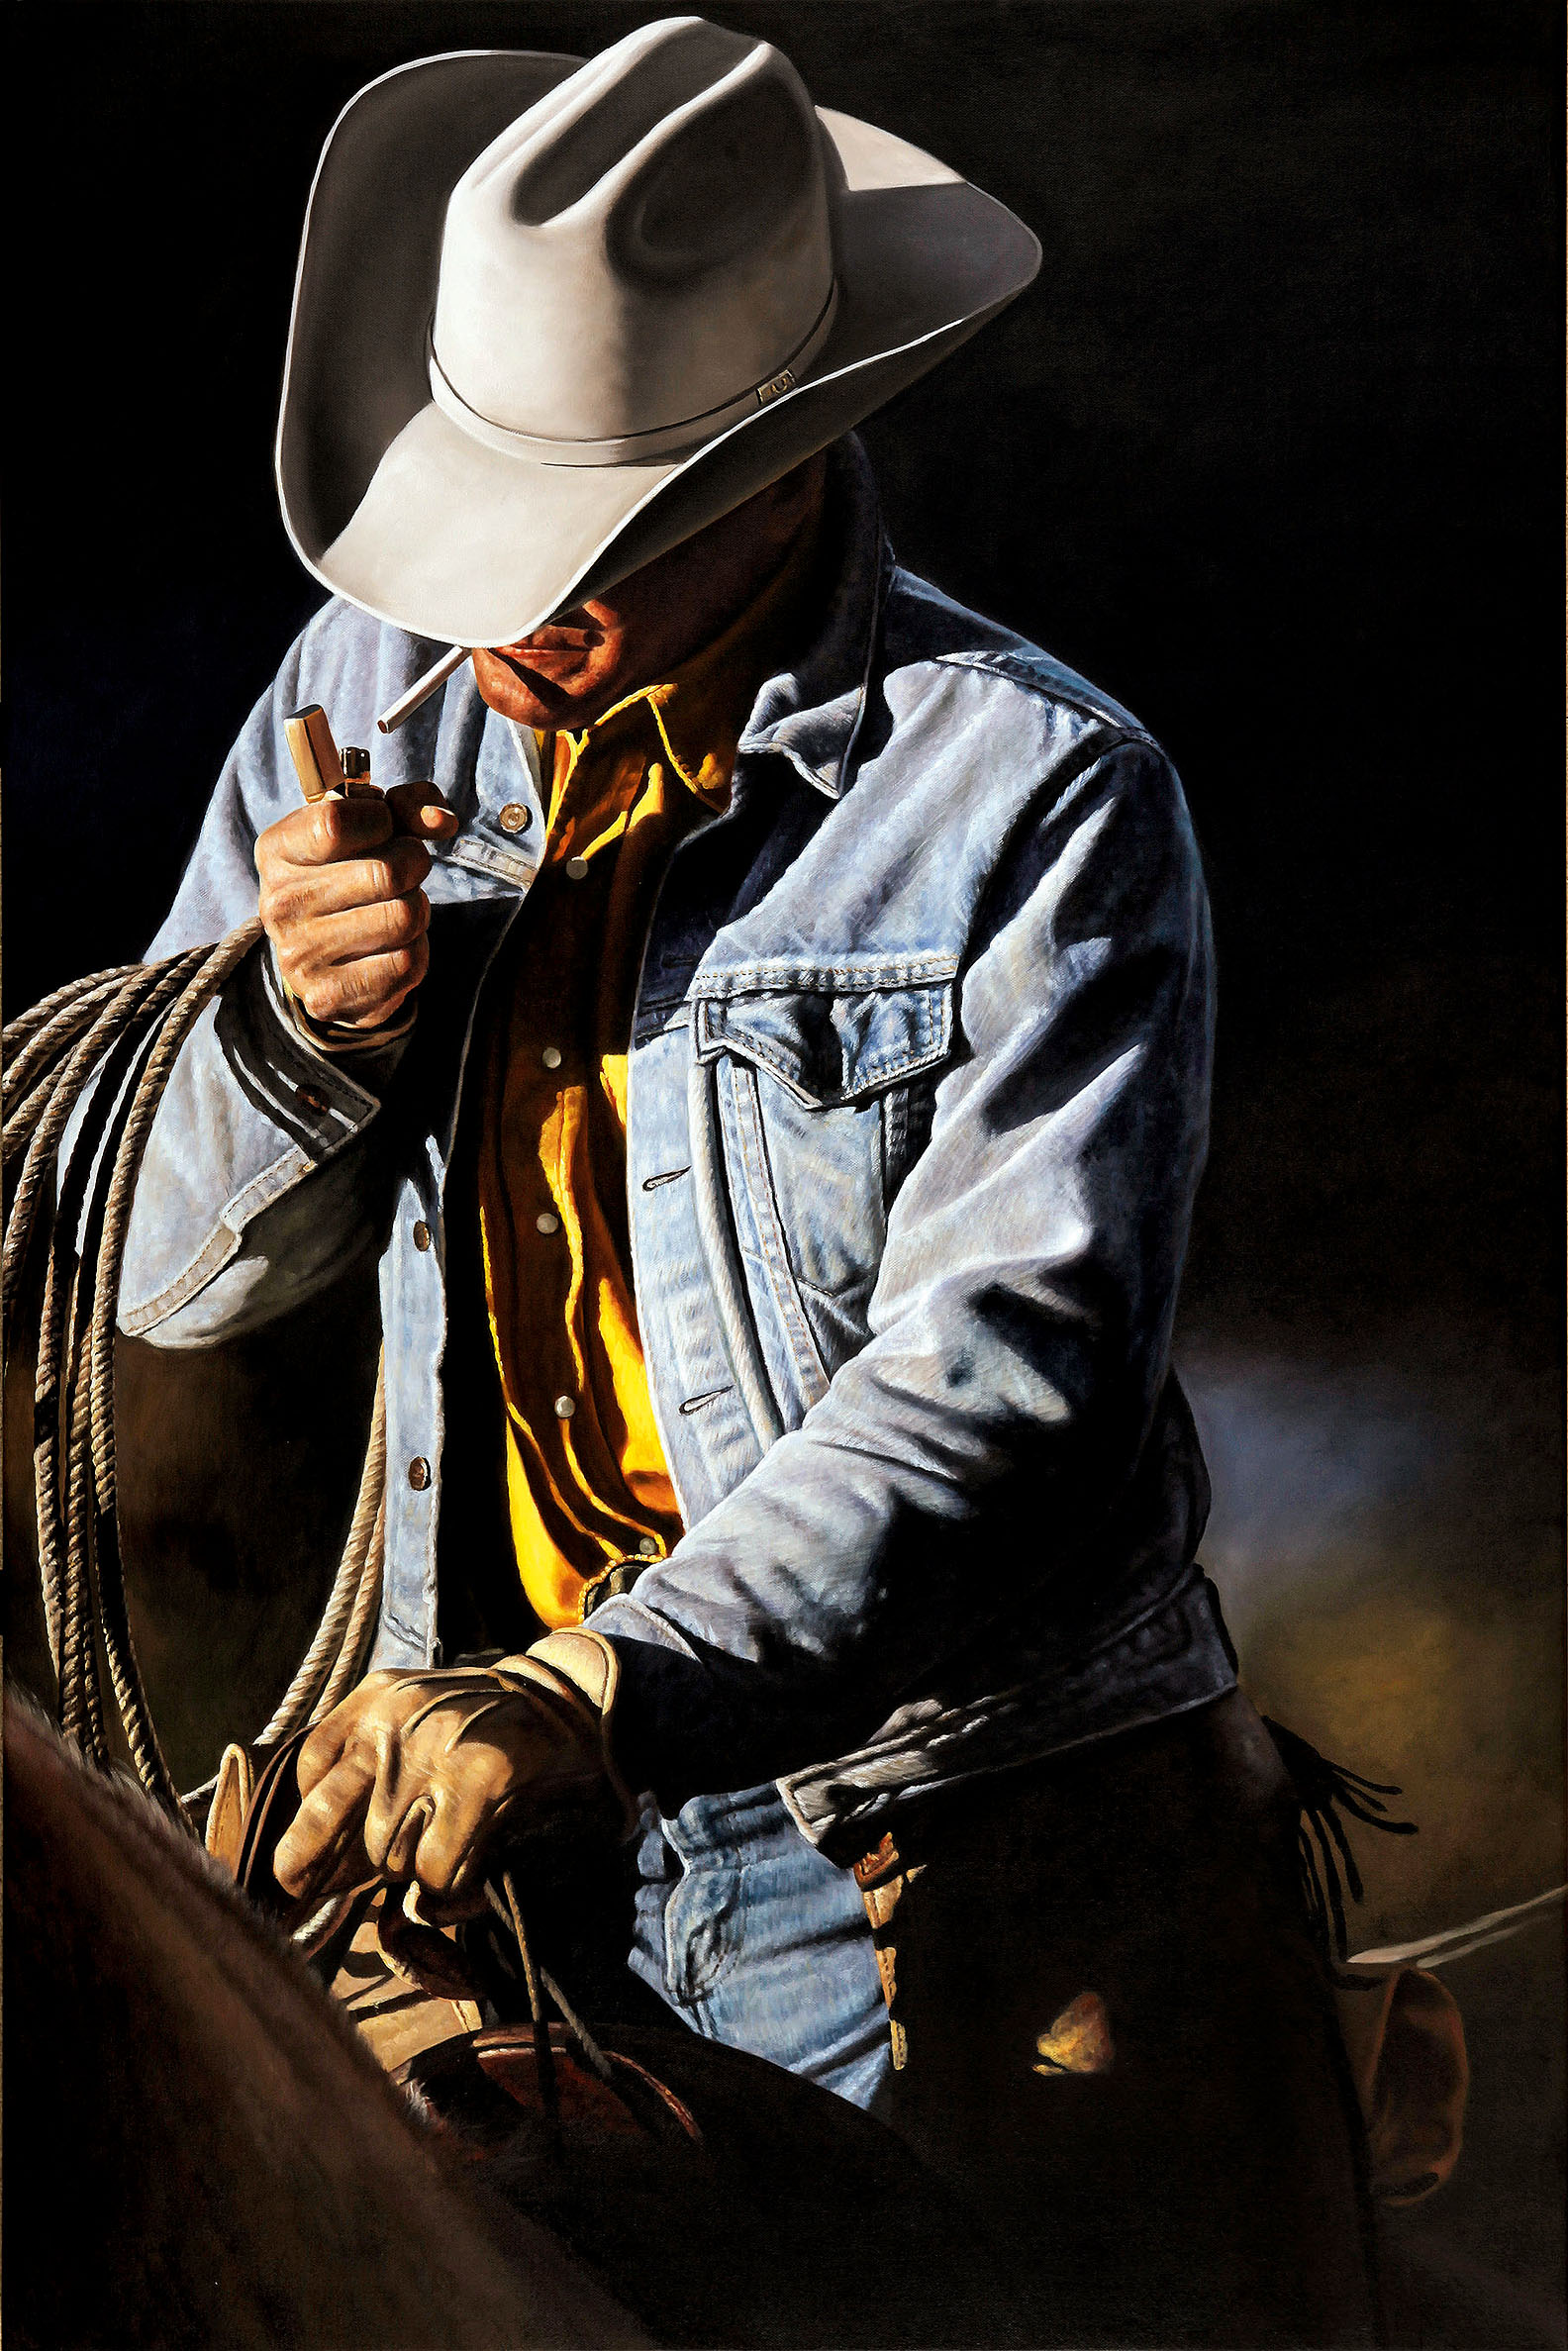 Hannes Schmid
Cowboy # 53, 2008
Öl auf Leinwand, 180 x 120 cm
Privatbesitz
© the artist